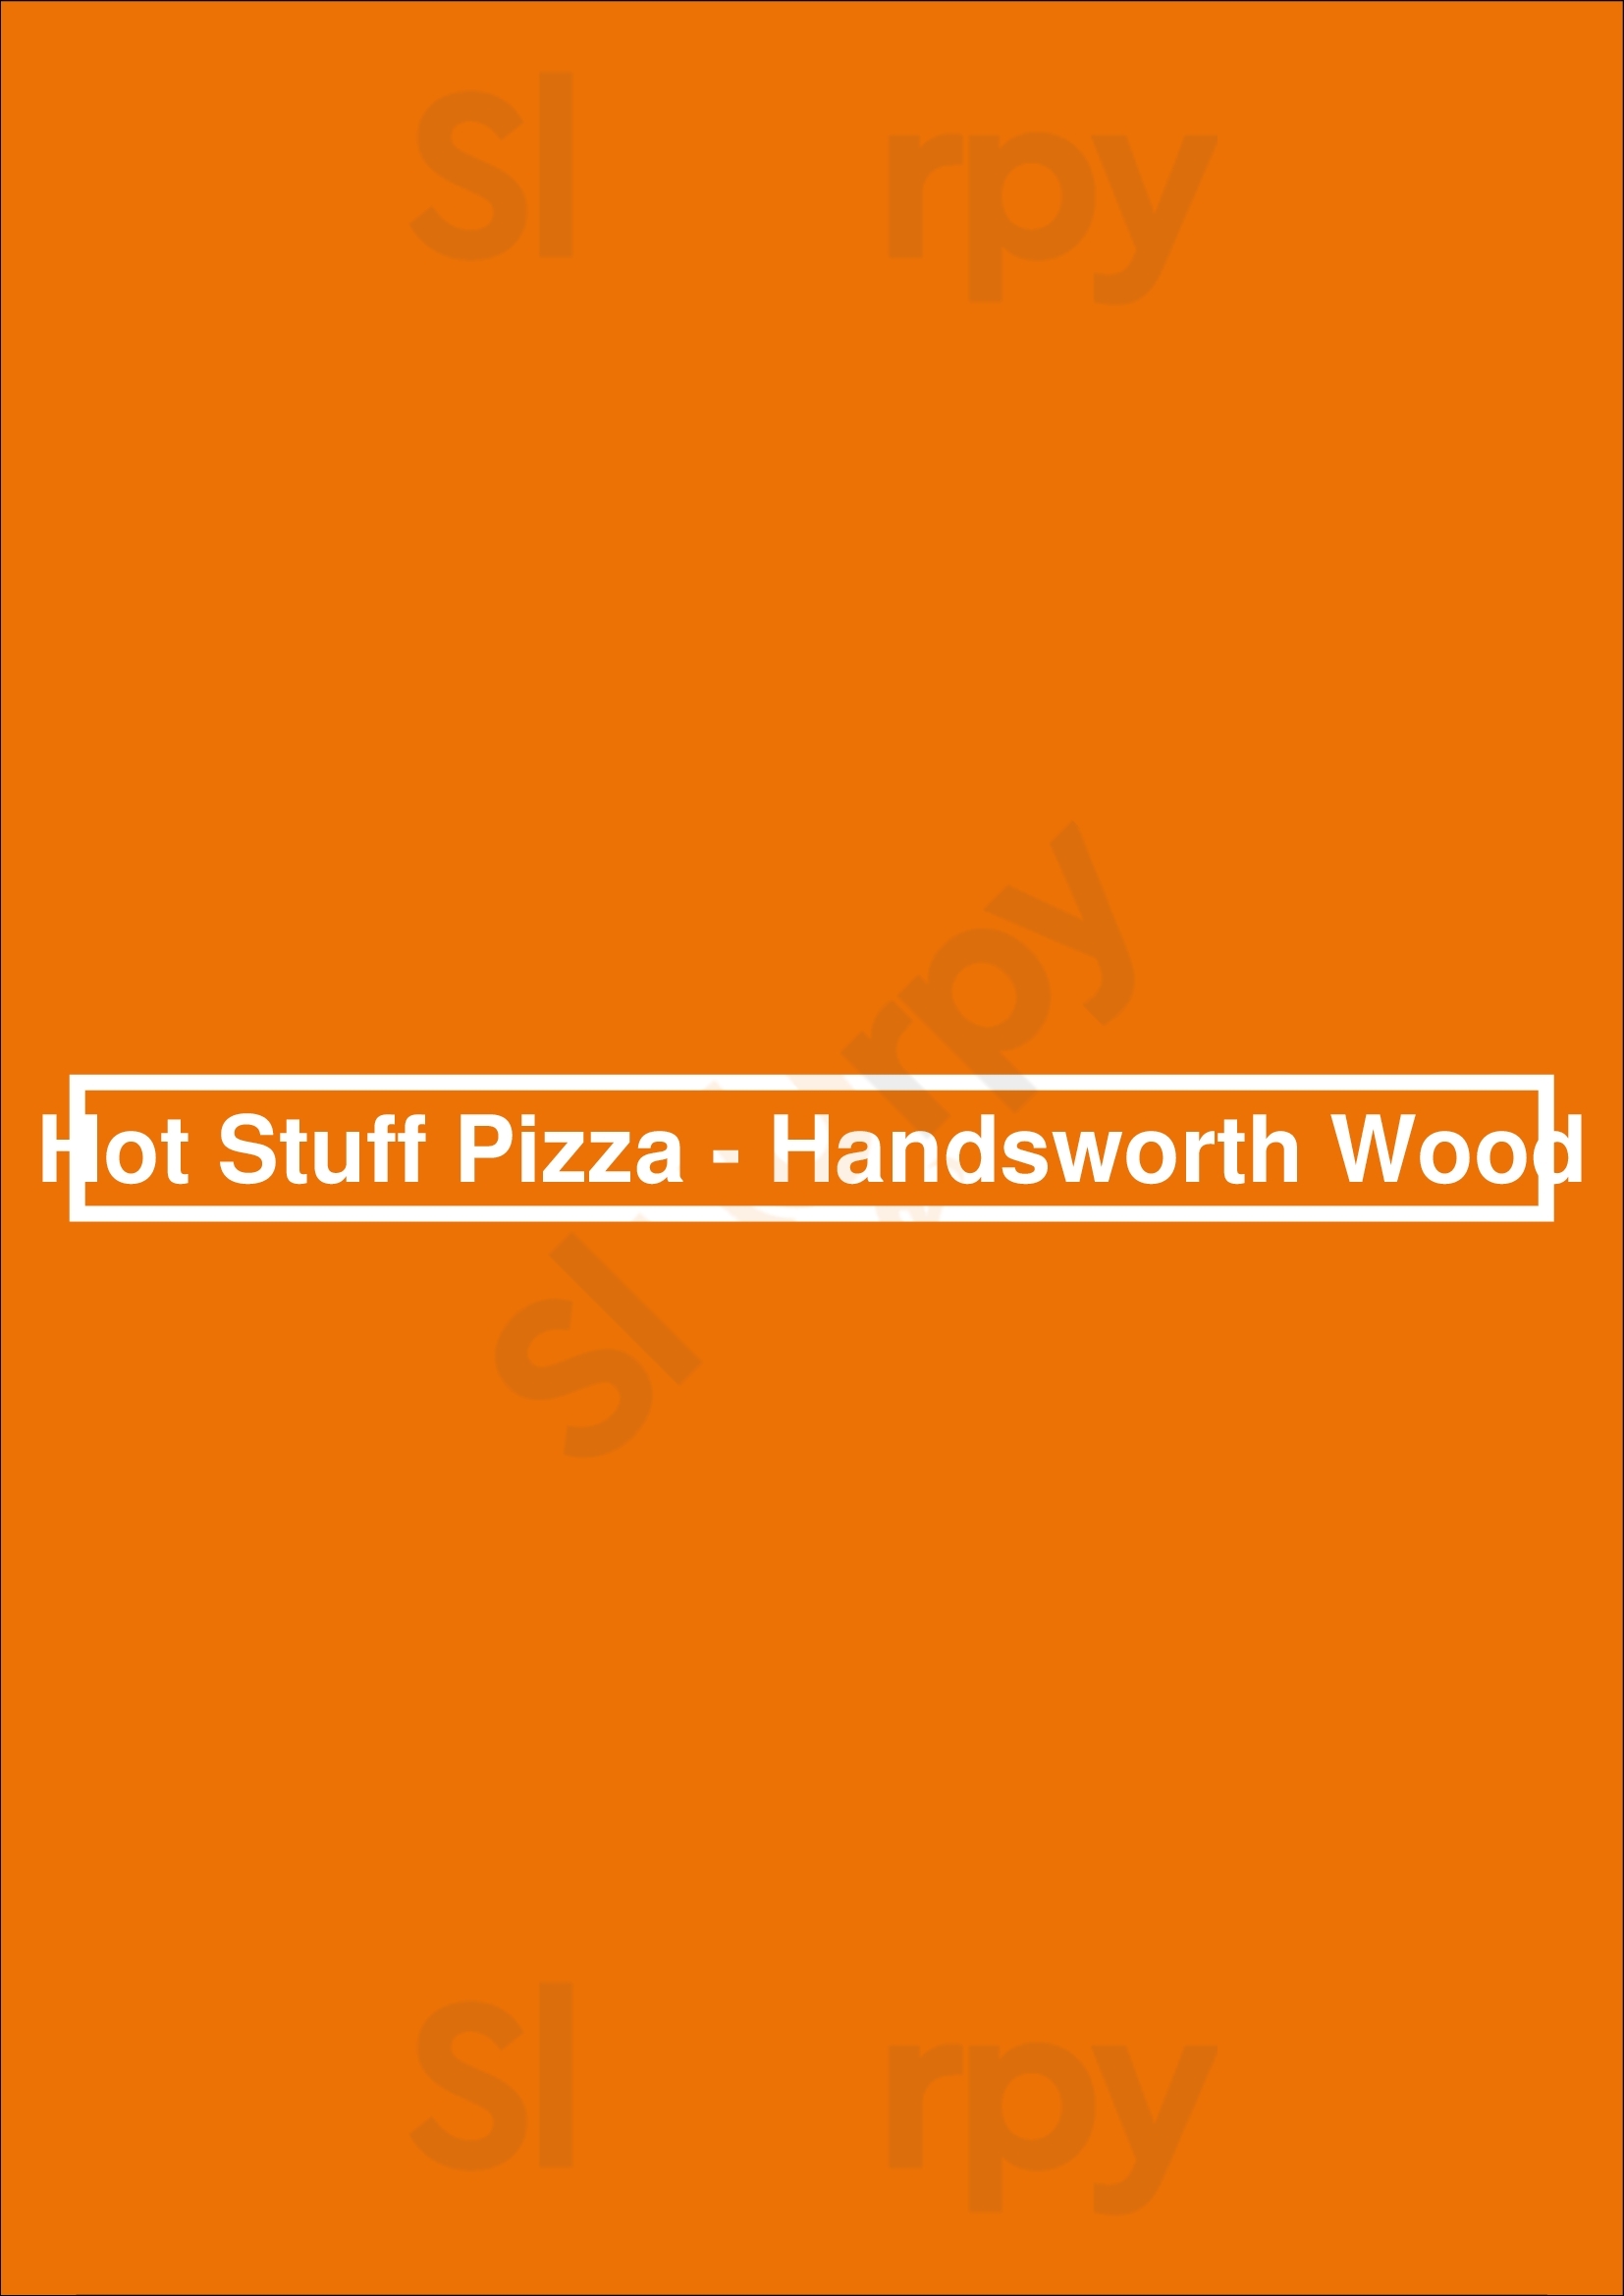 Hot Stuff Pizza - Handsworth Wood Birmingham Menu - 1